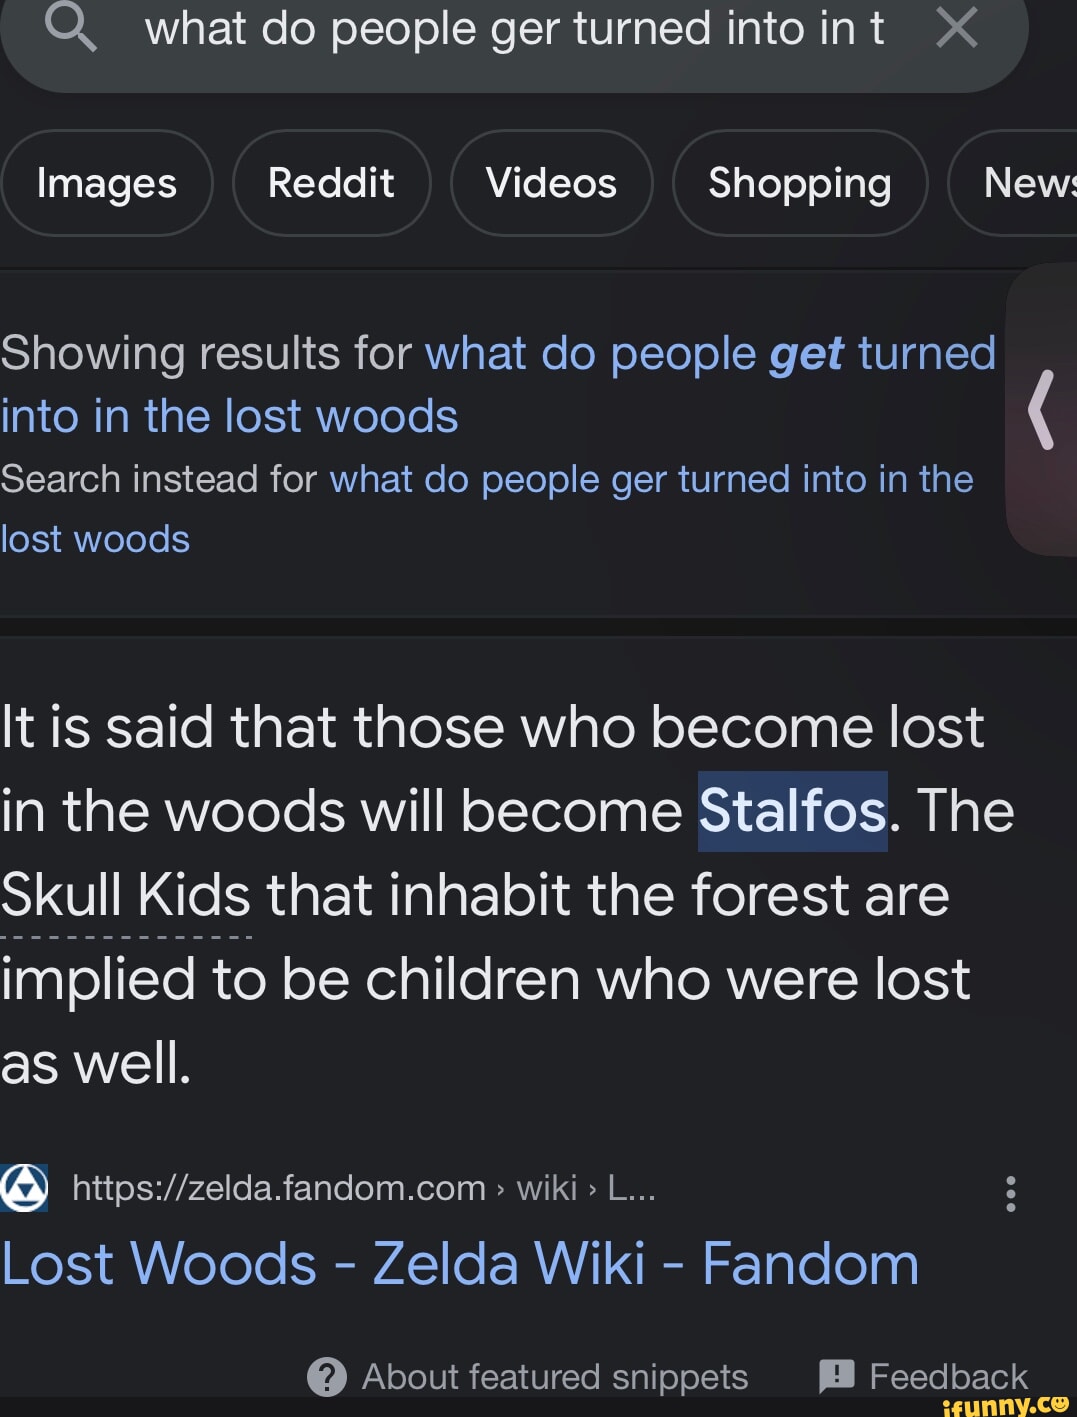 Lost Woods - Zelda Wiki